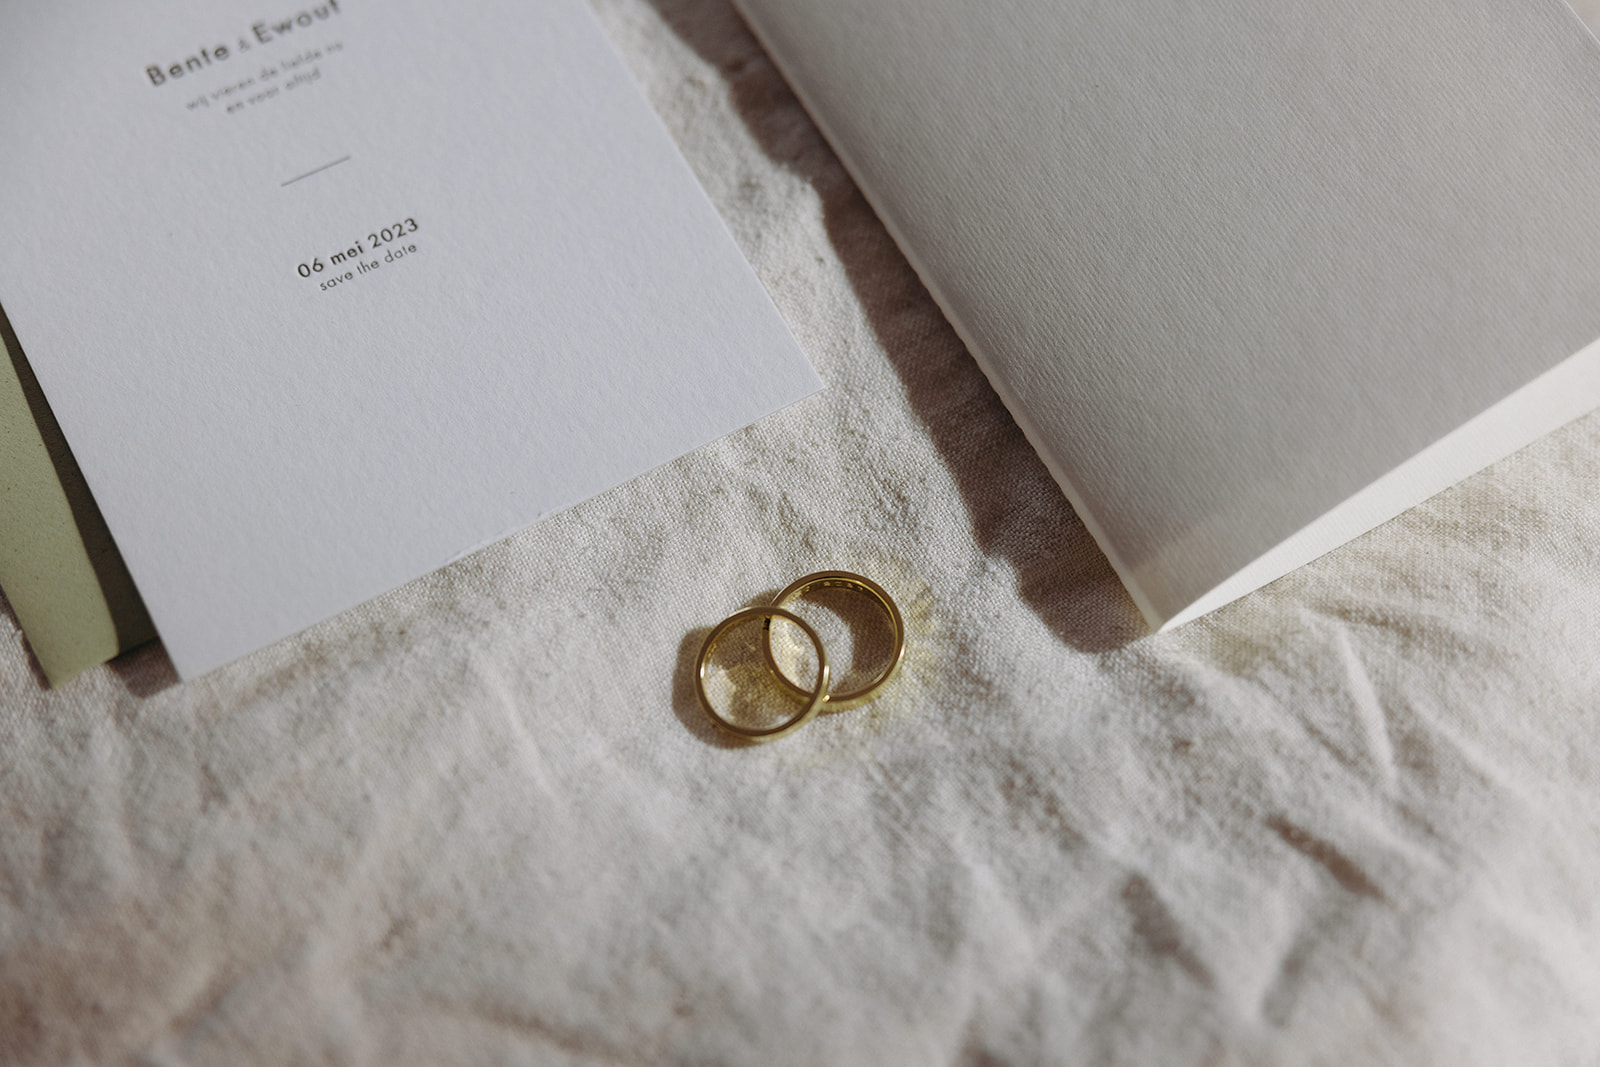 Stylish wedding stationery showcasing minimalist design